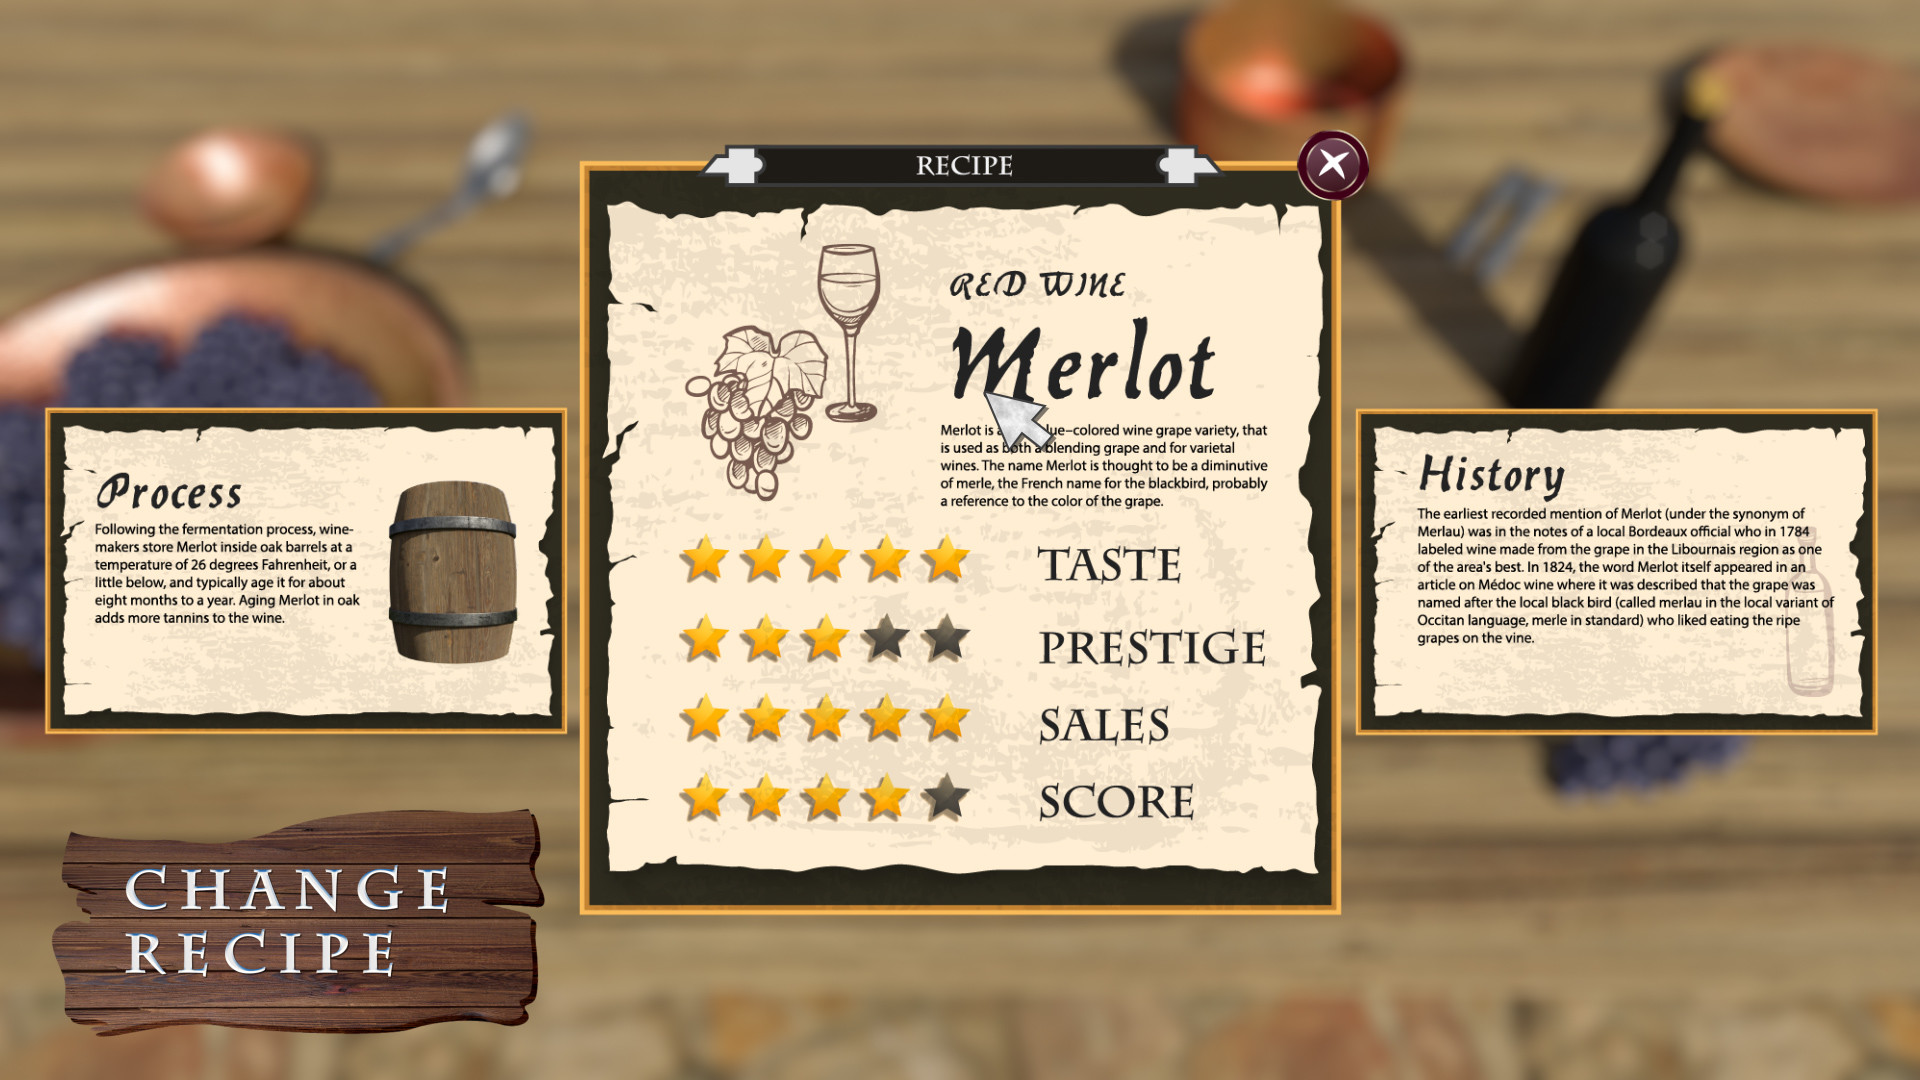 Winery Simulator screenshot